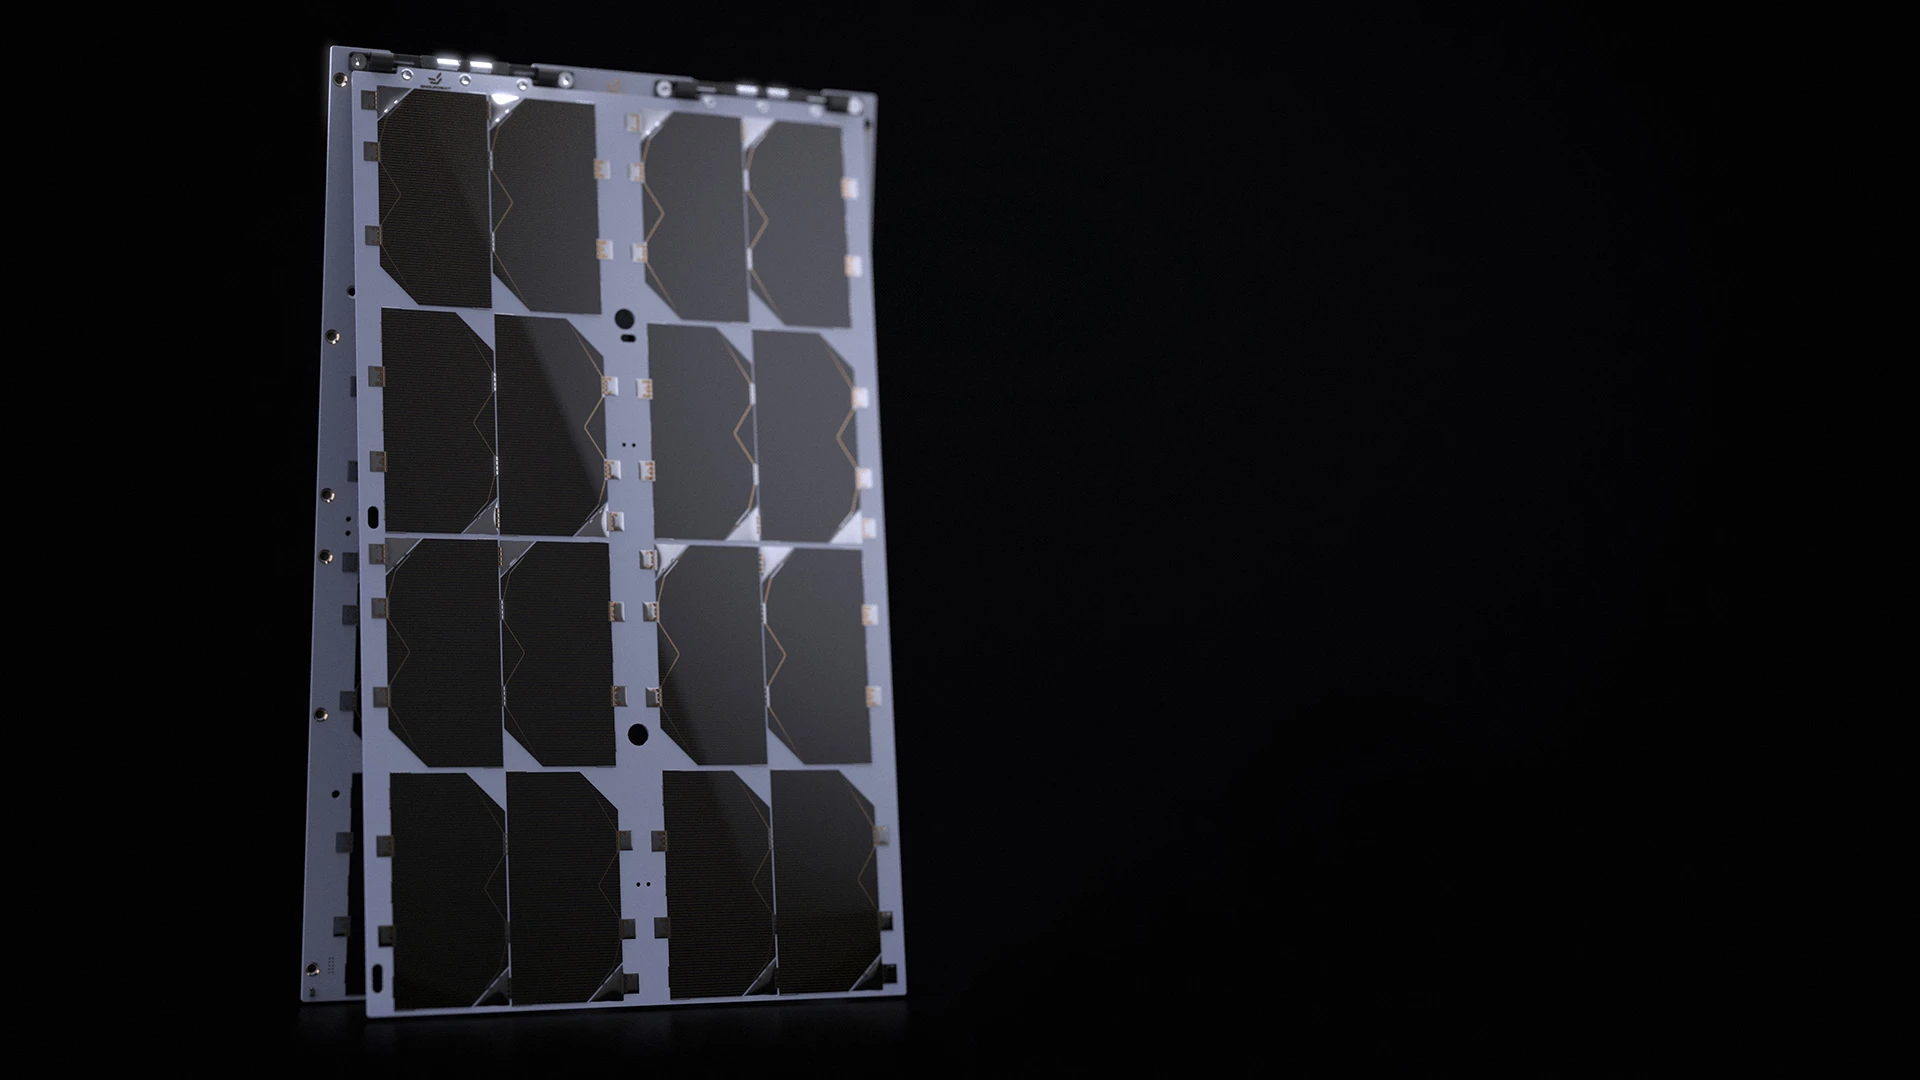 6U Deployable Solar Array web render 5